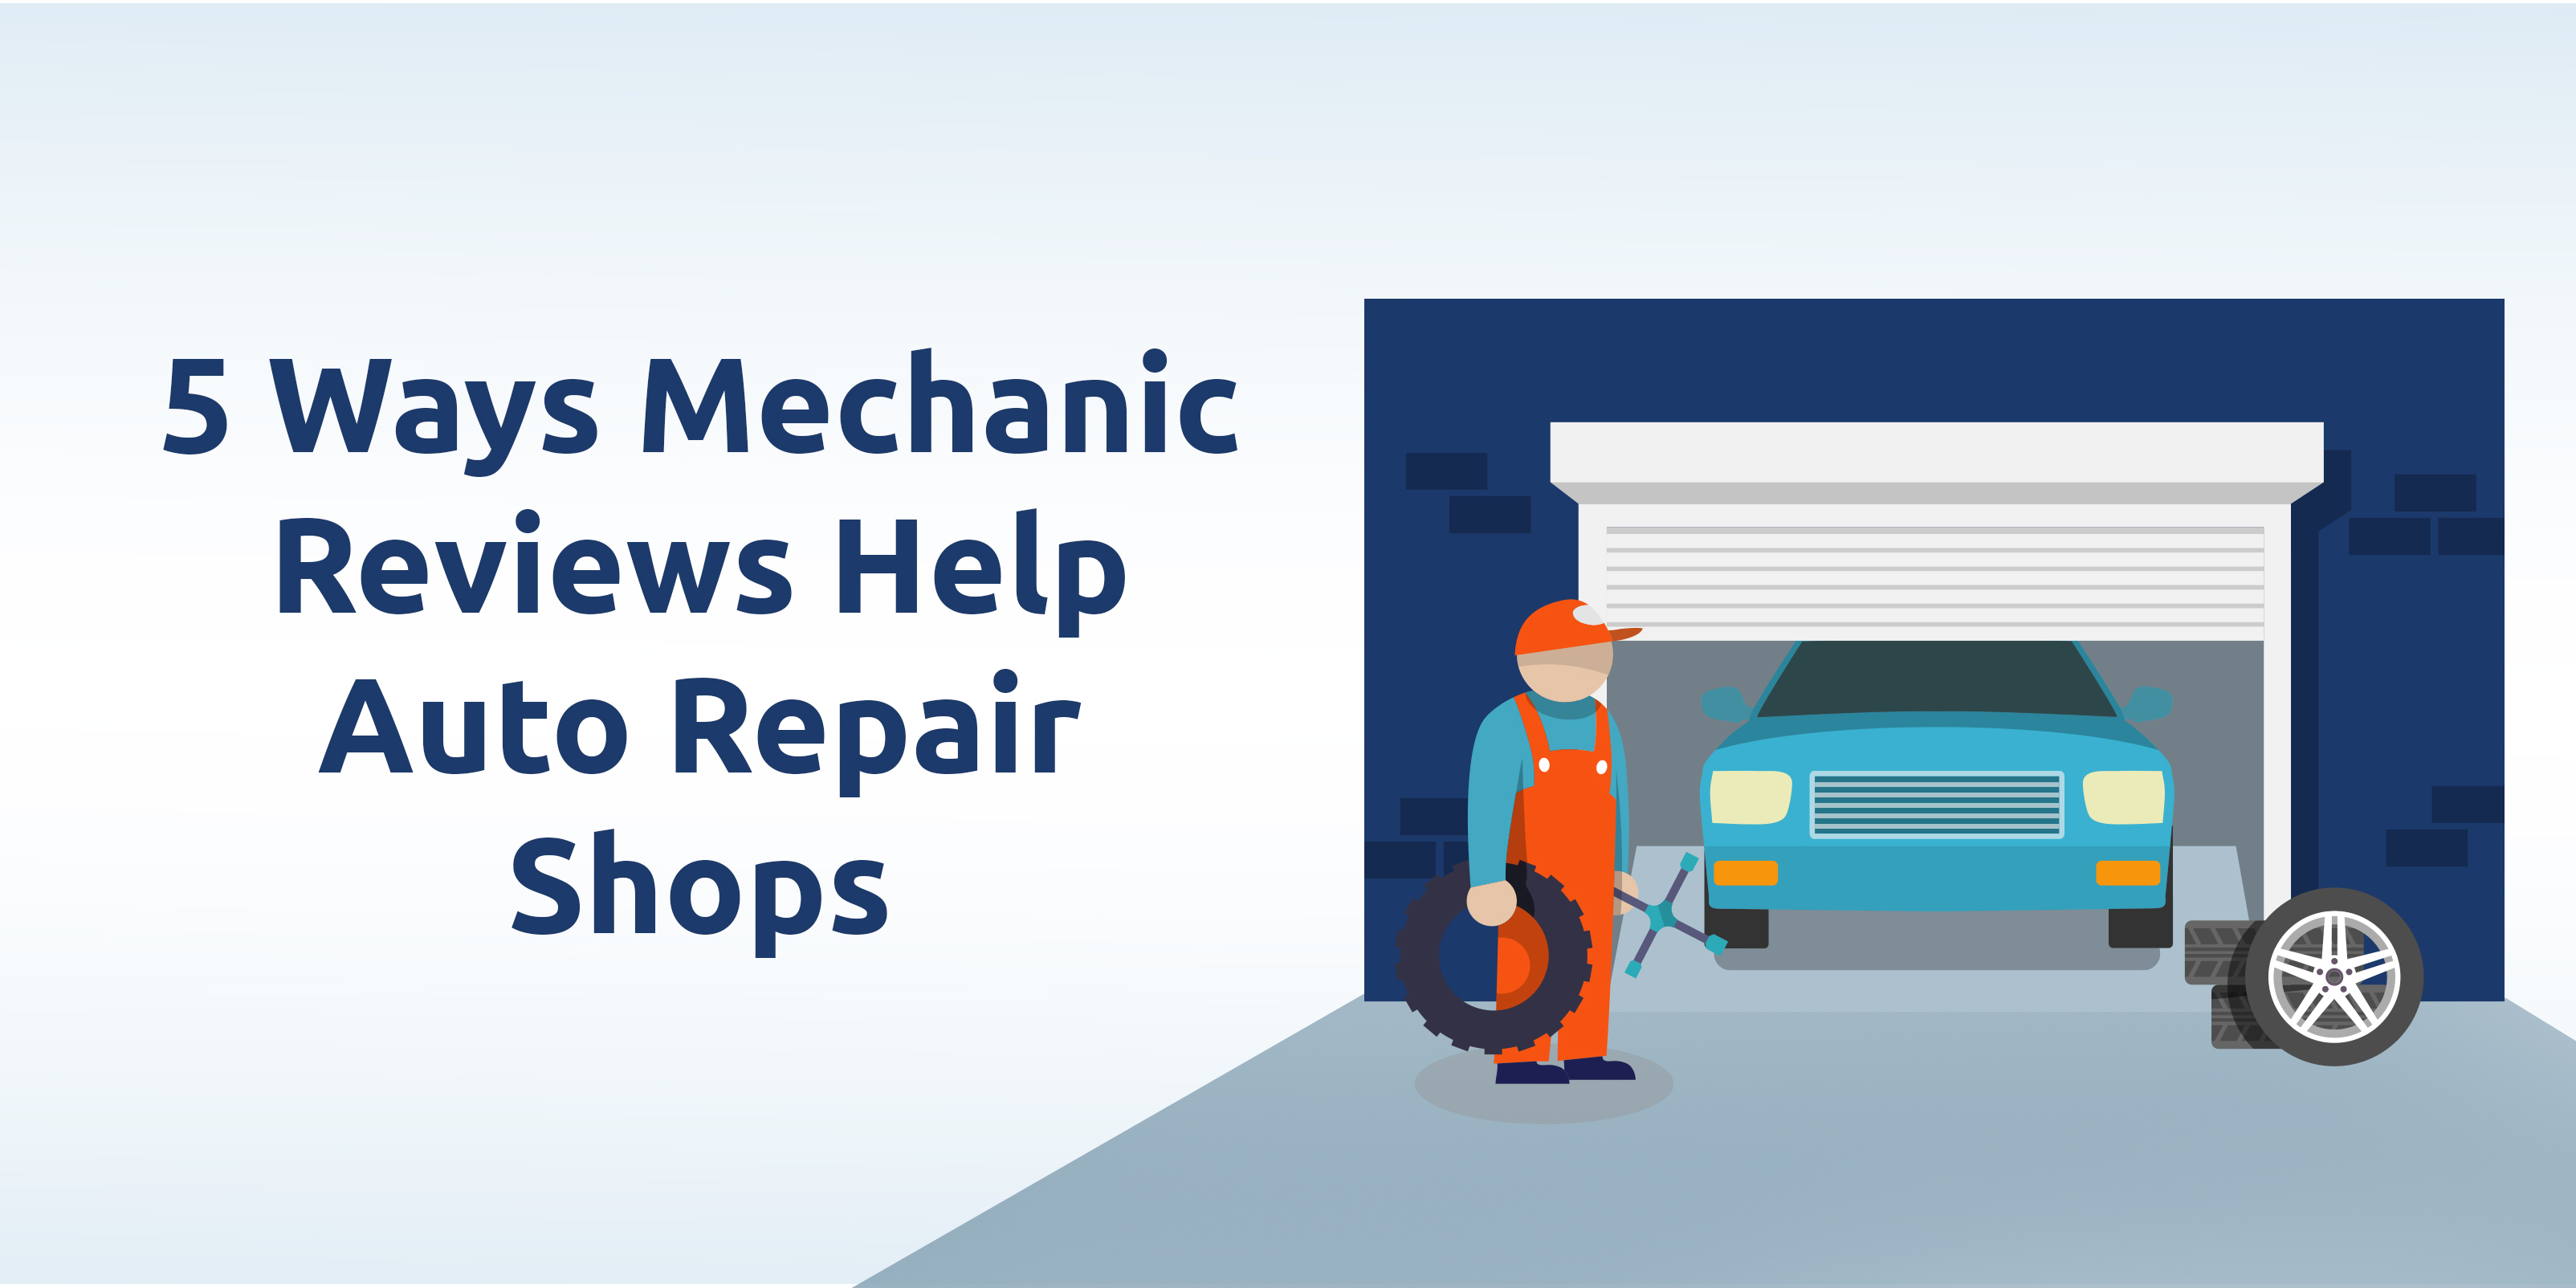 5 Ways To Improve Your Auto Repair Shop Reviews